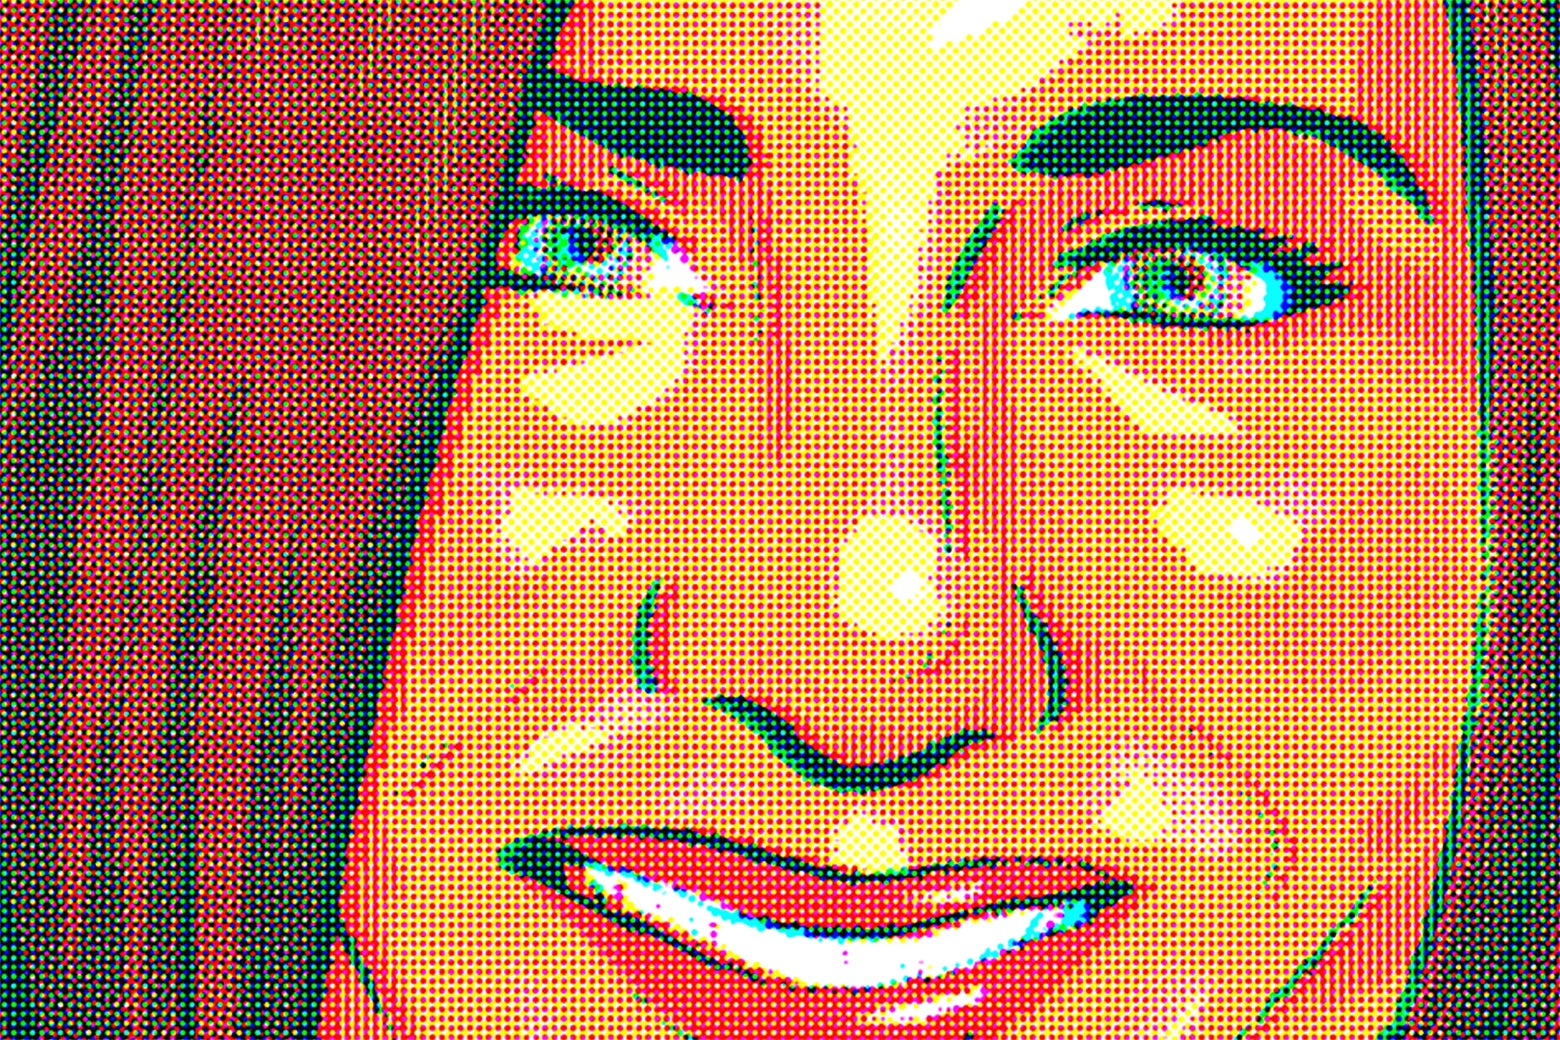 A pointillistic image of Jennifer Aniston.